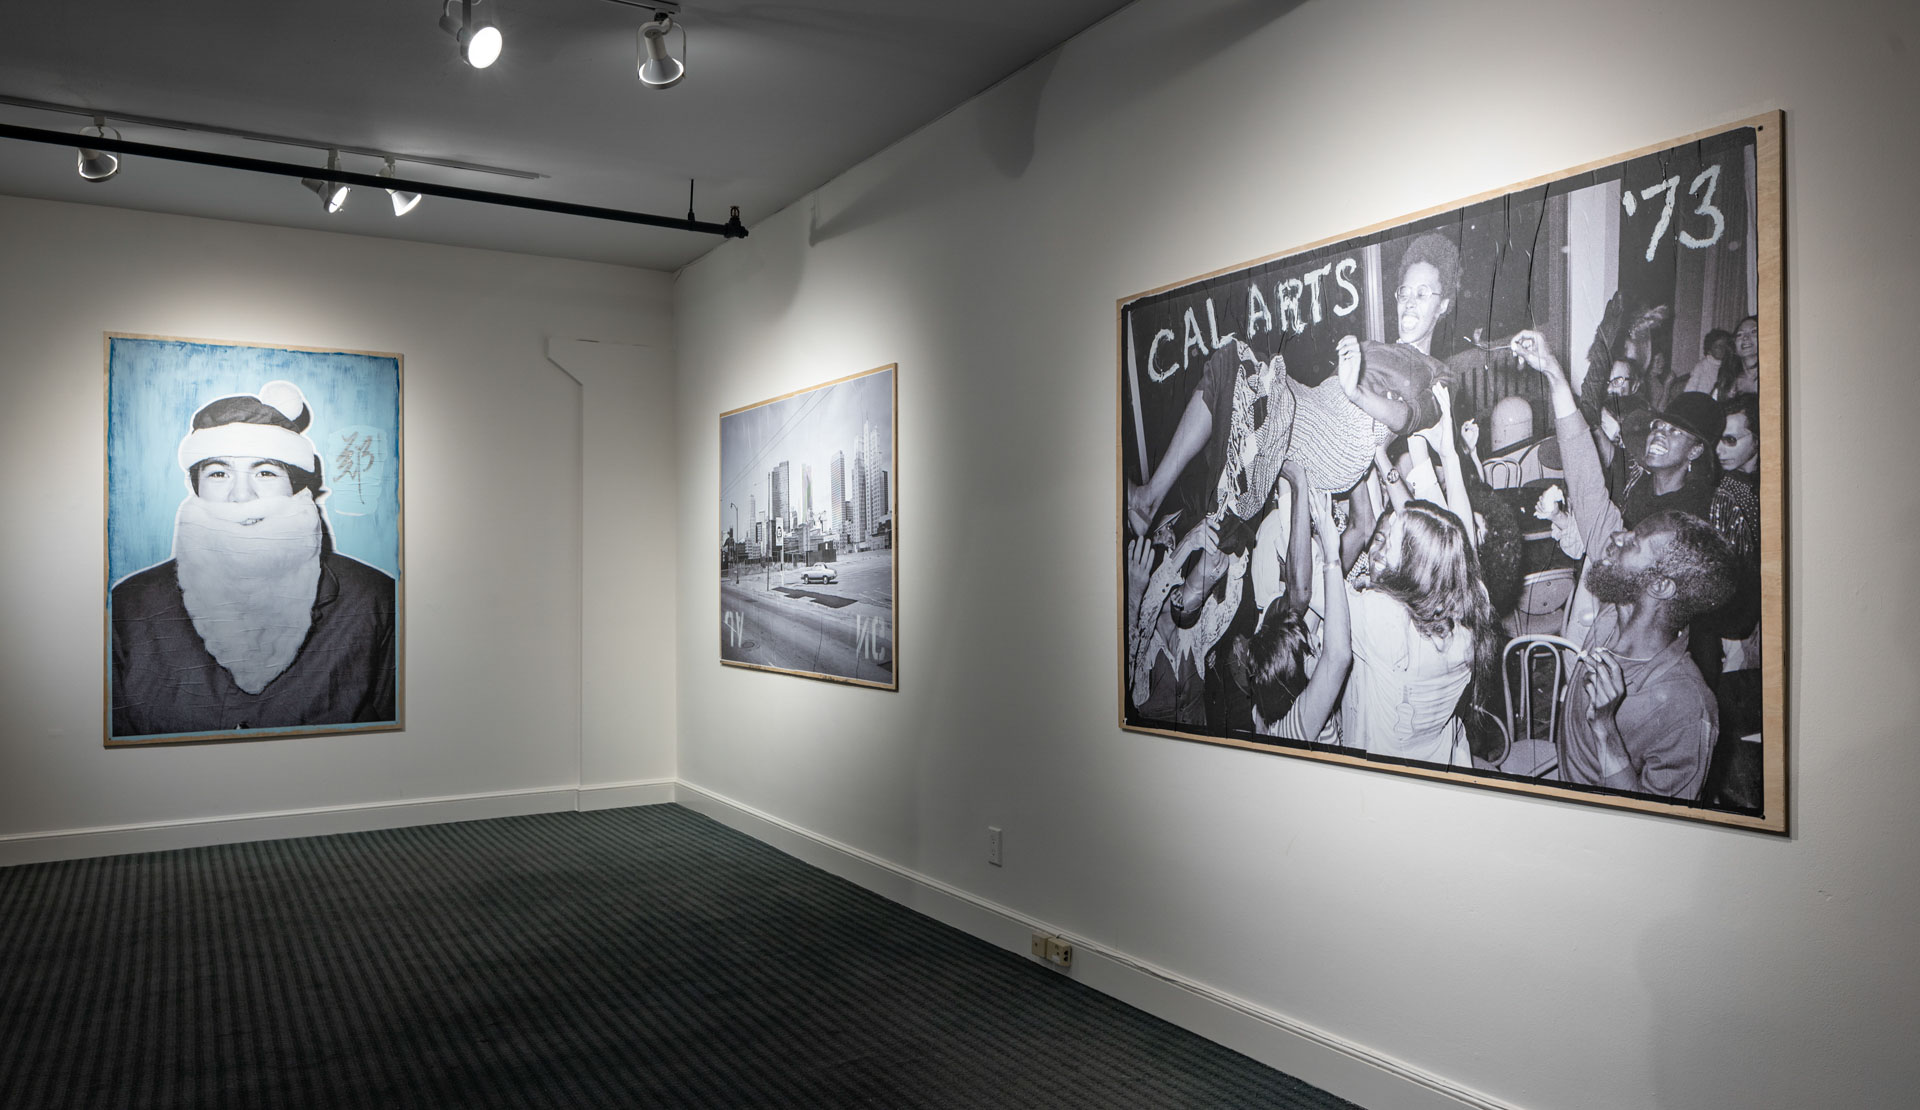 "Post No Jangs" Lee Gallery at Crowne Point Press. Installation photo by Henrik Kam